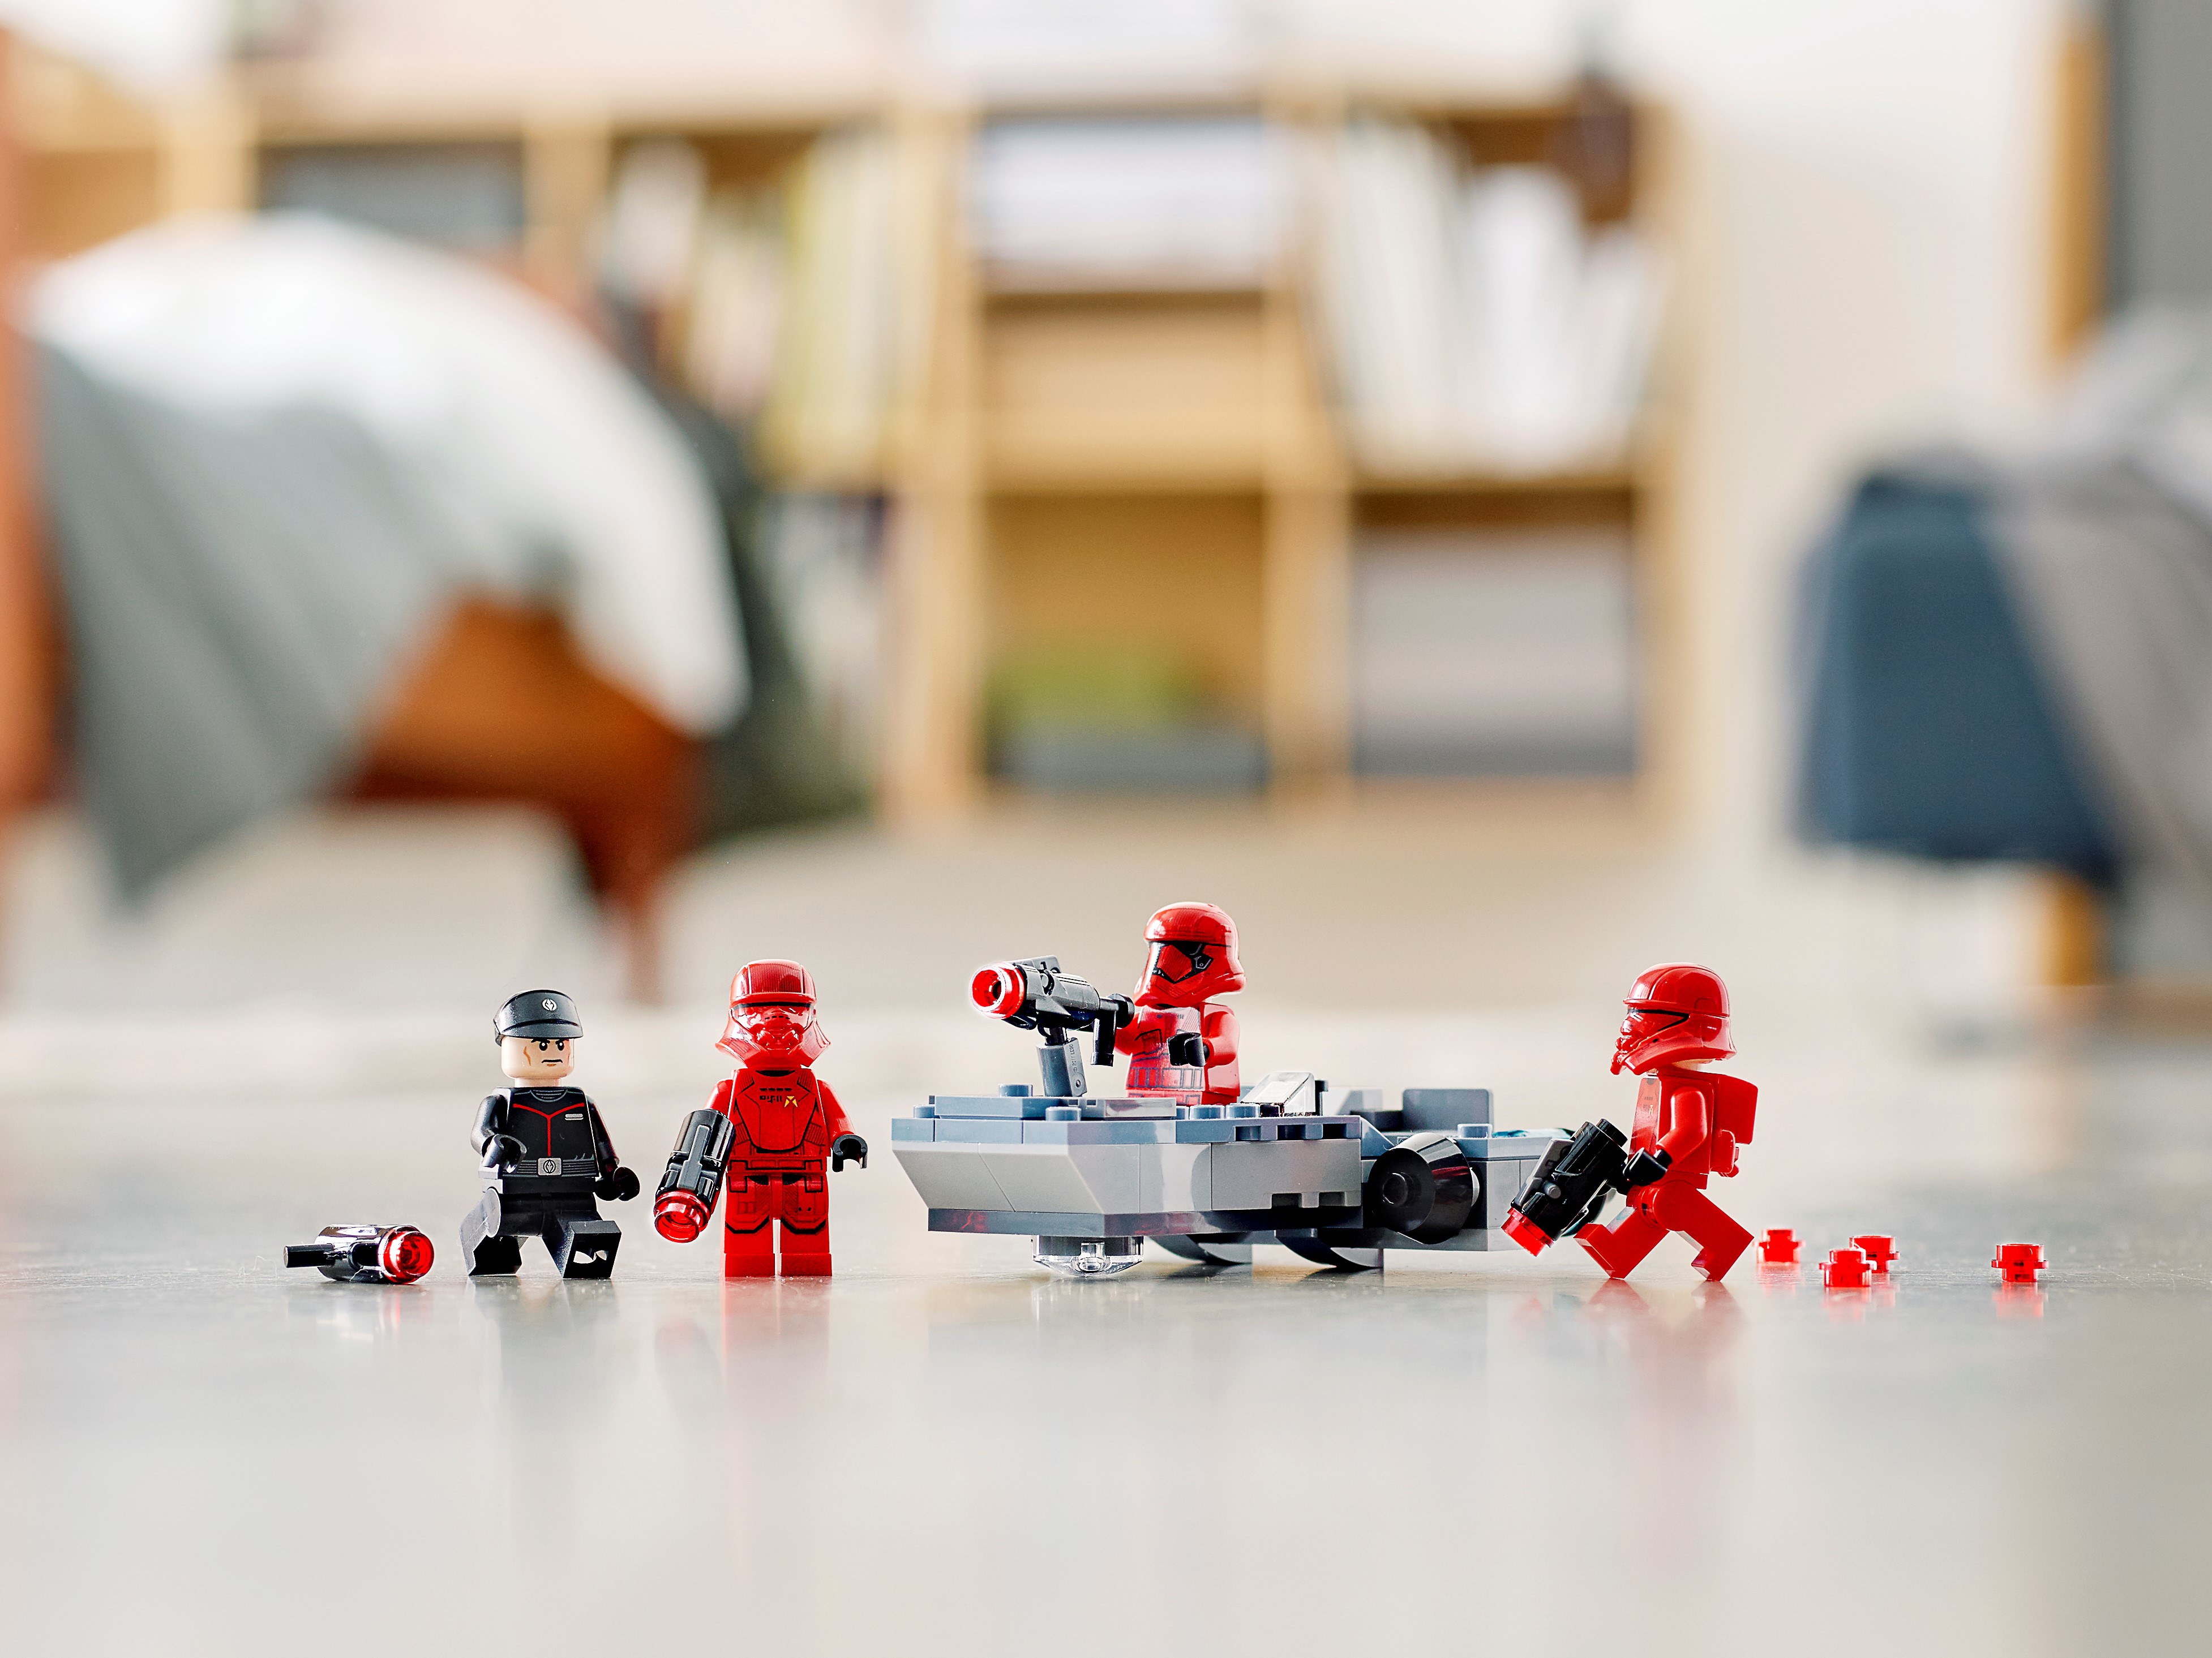 LEGO® Star Wars™ 75266 Sith Troopers™ Battle Pack NEU & OVP 